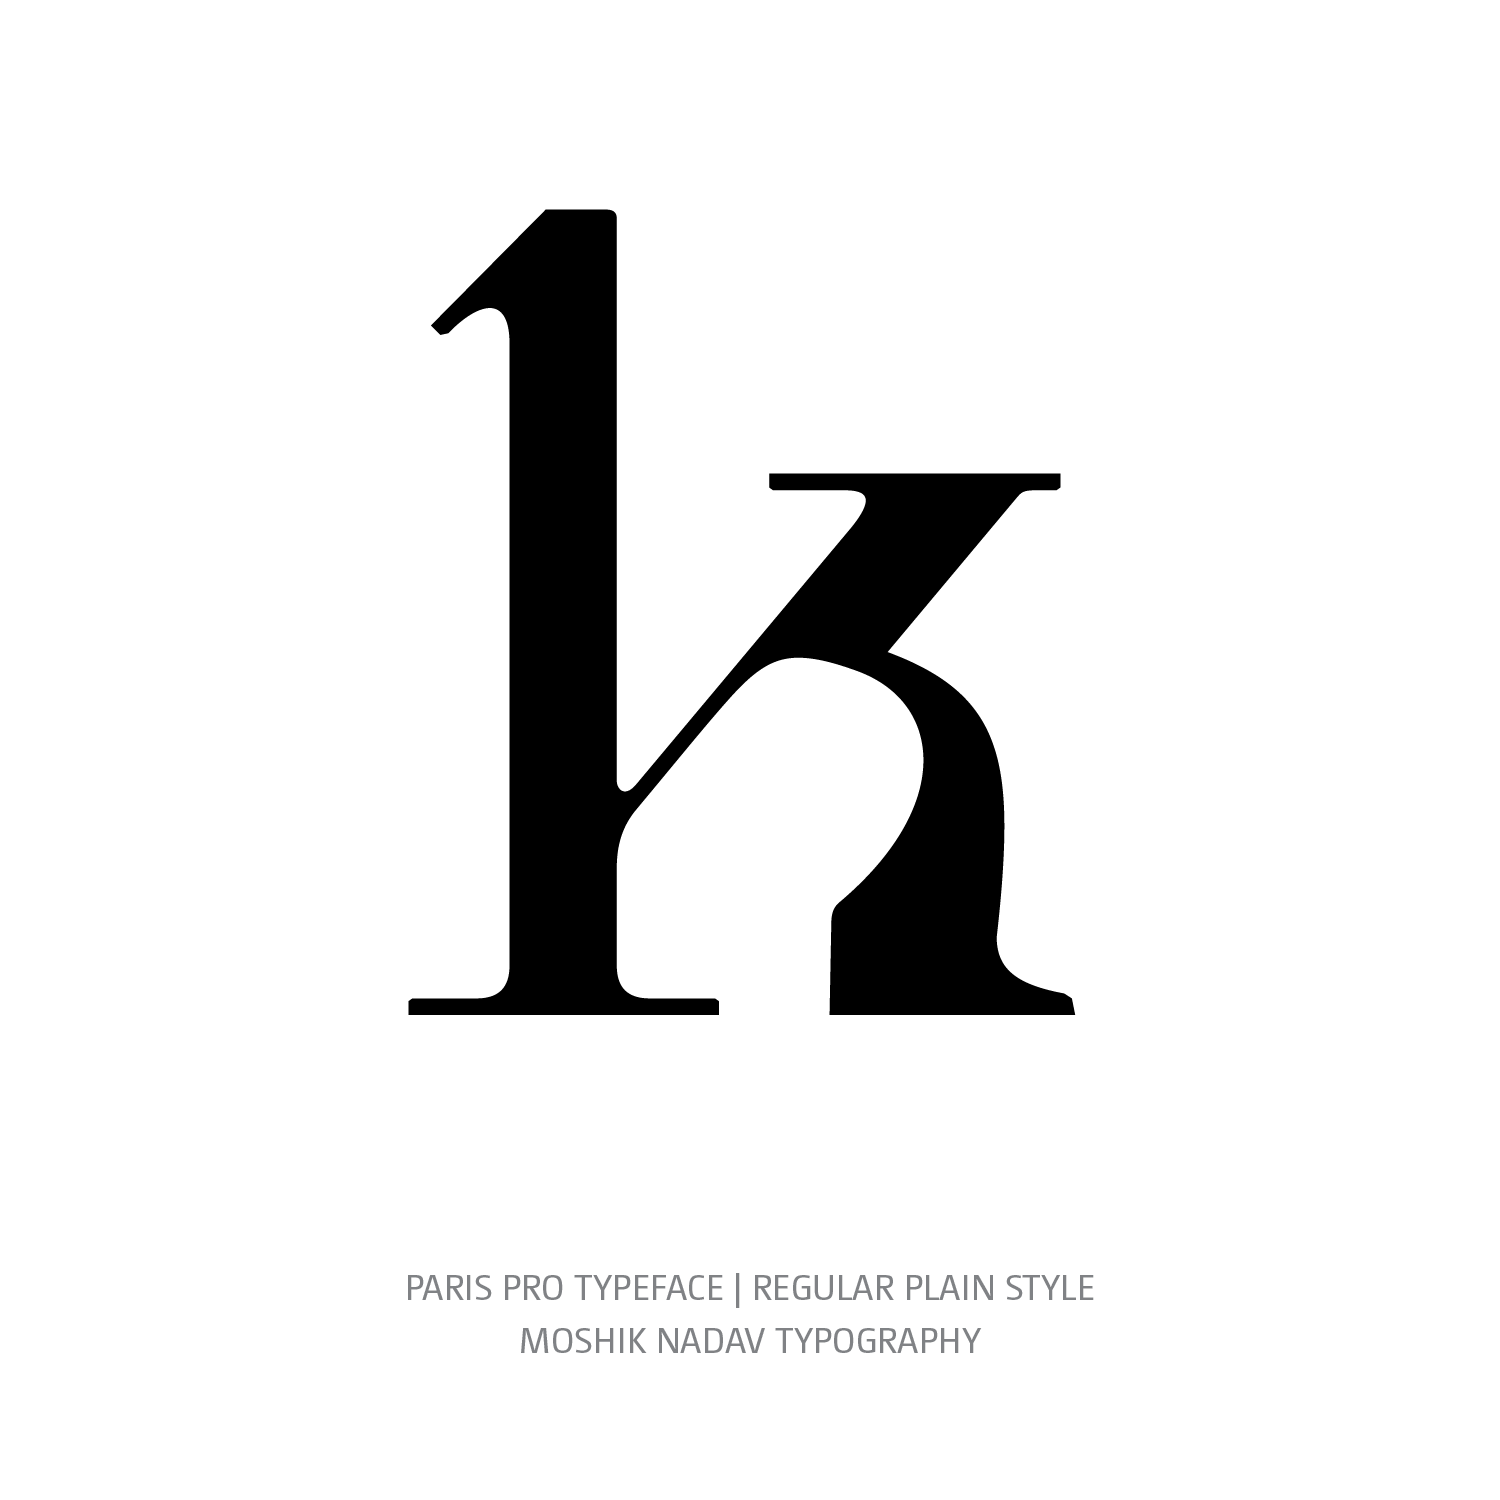 Paris Pro Typeface Regular Plain k